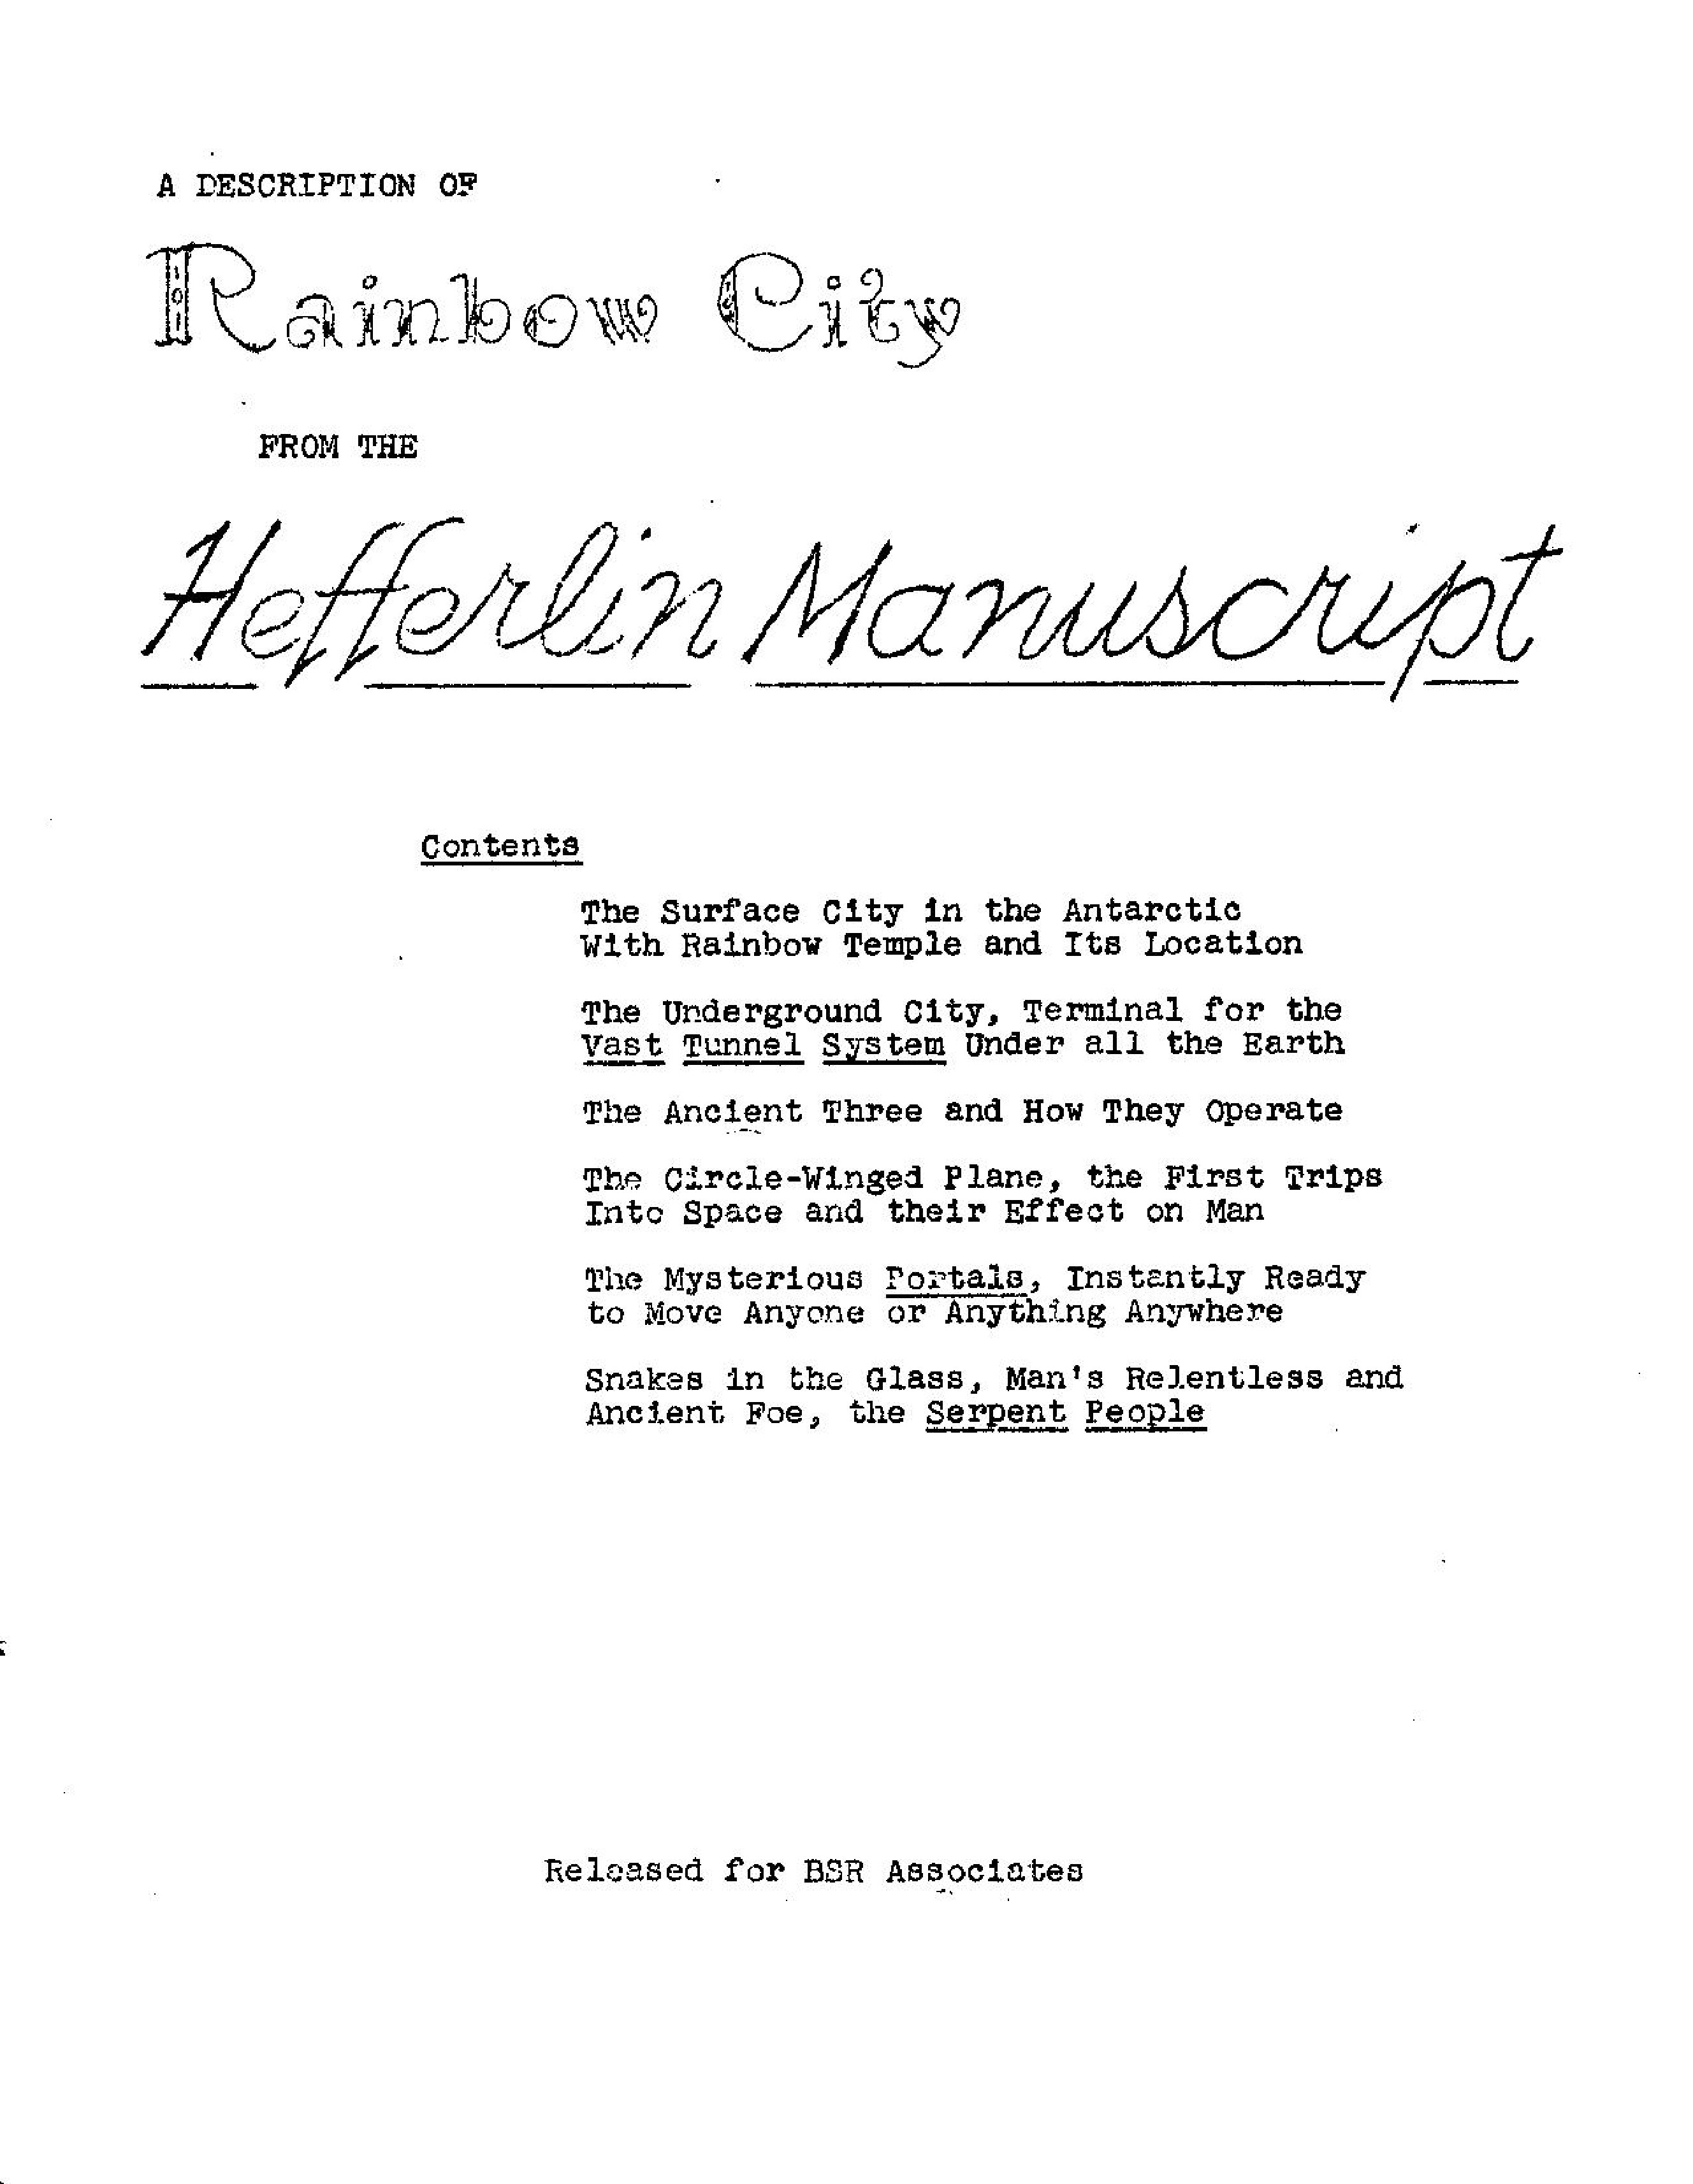 A Description of Rainbow City from the Hefferlin Manuscript